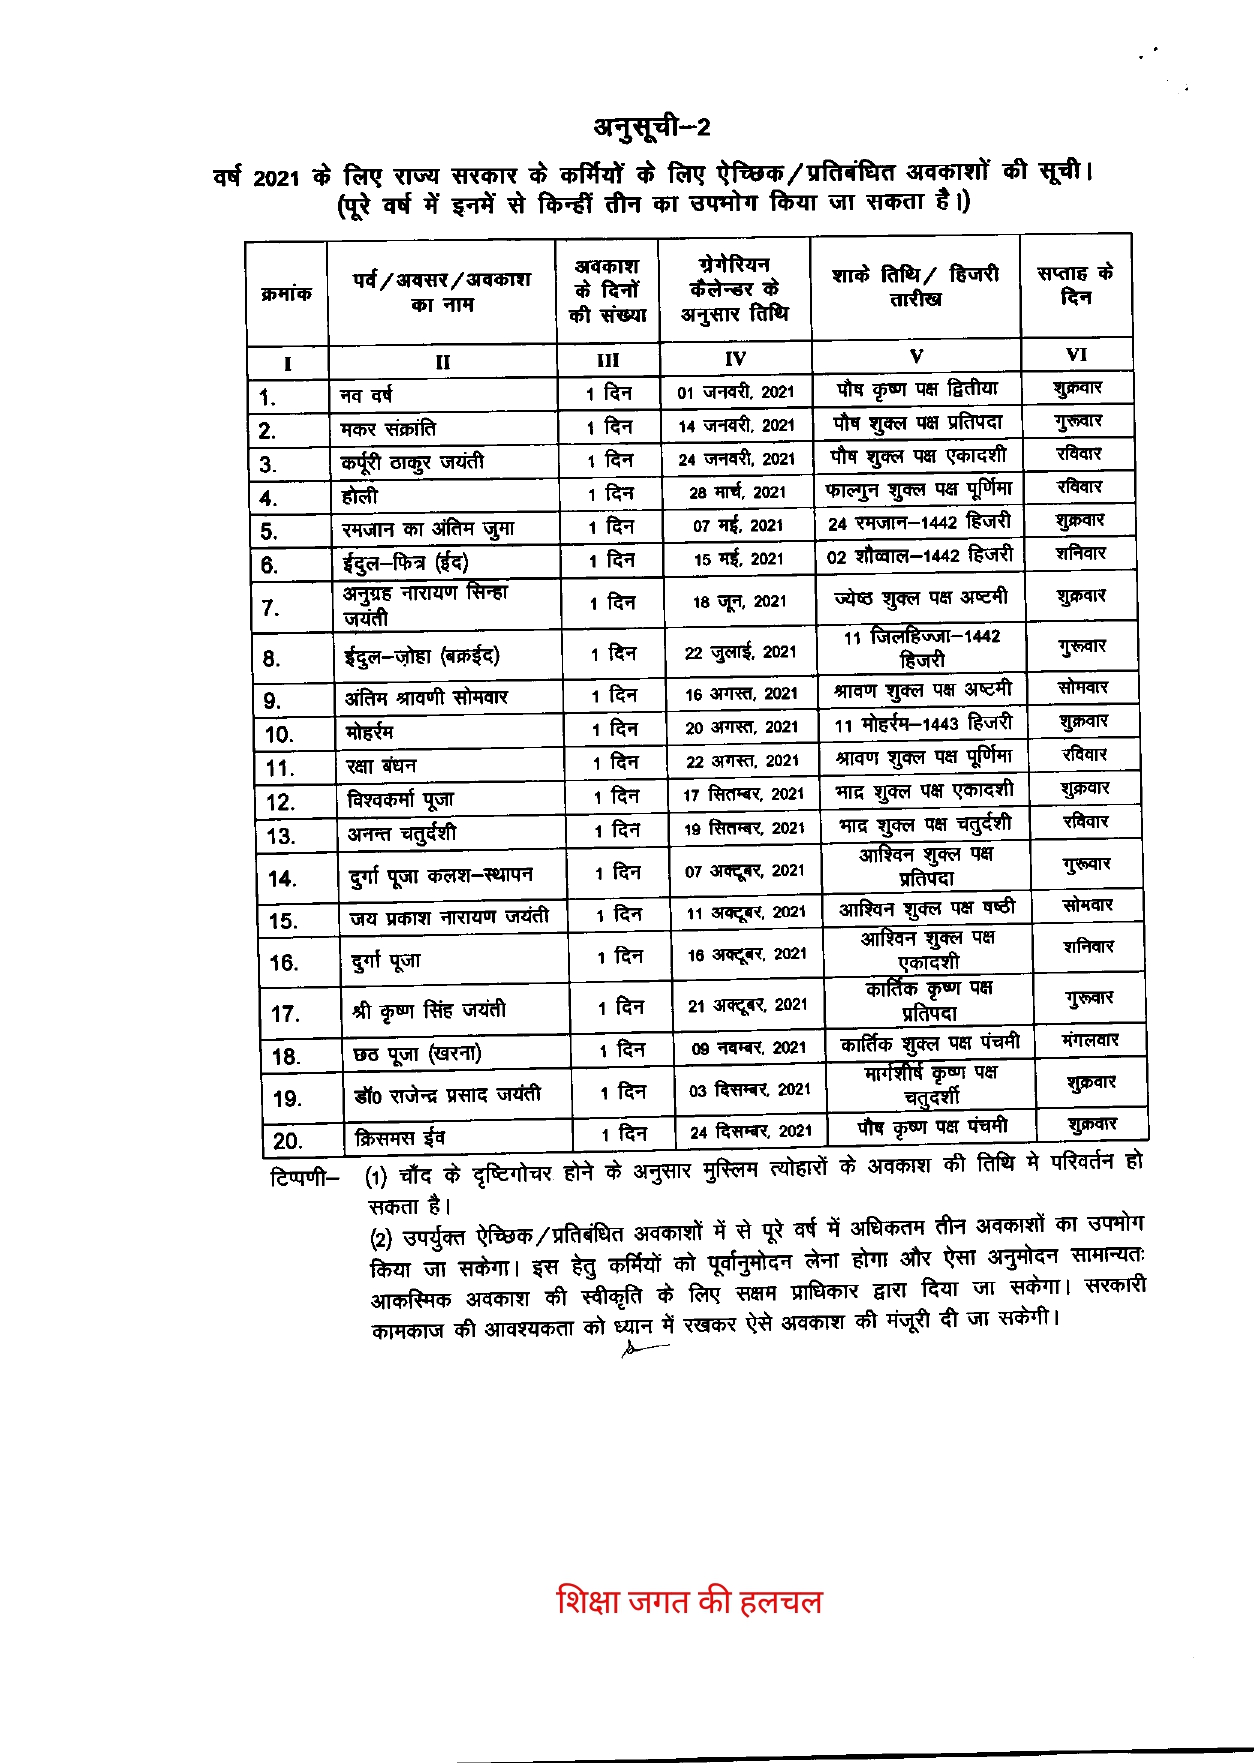 Bihar Government Calendar 2021